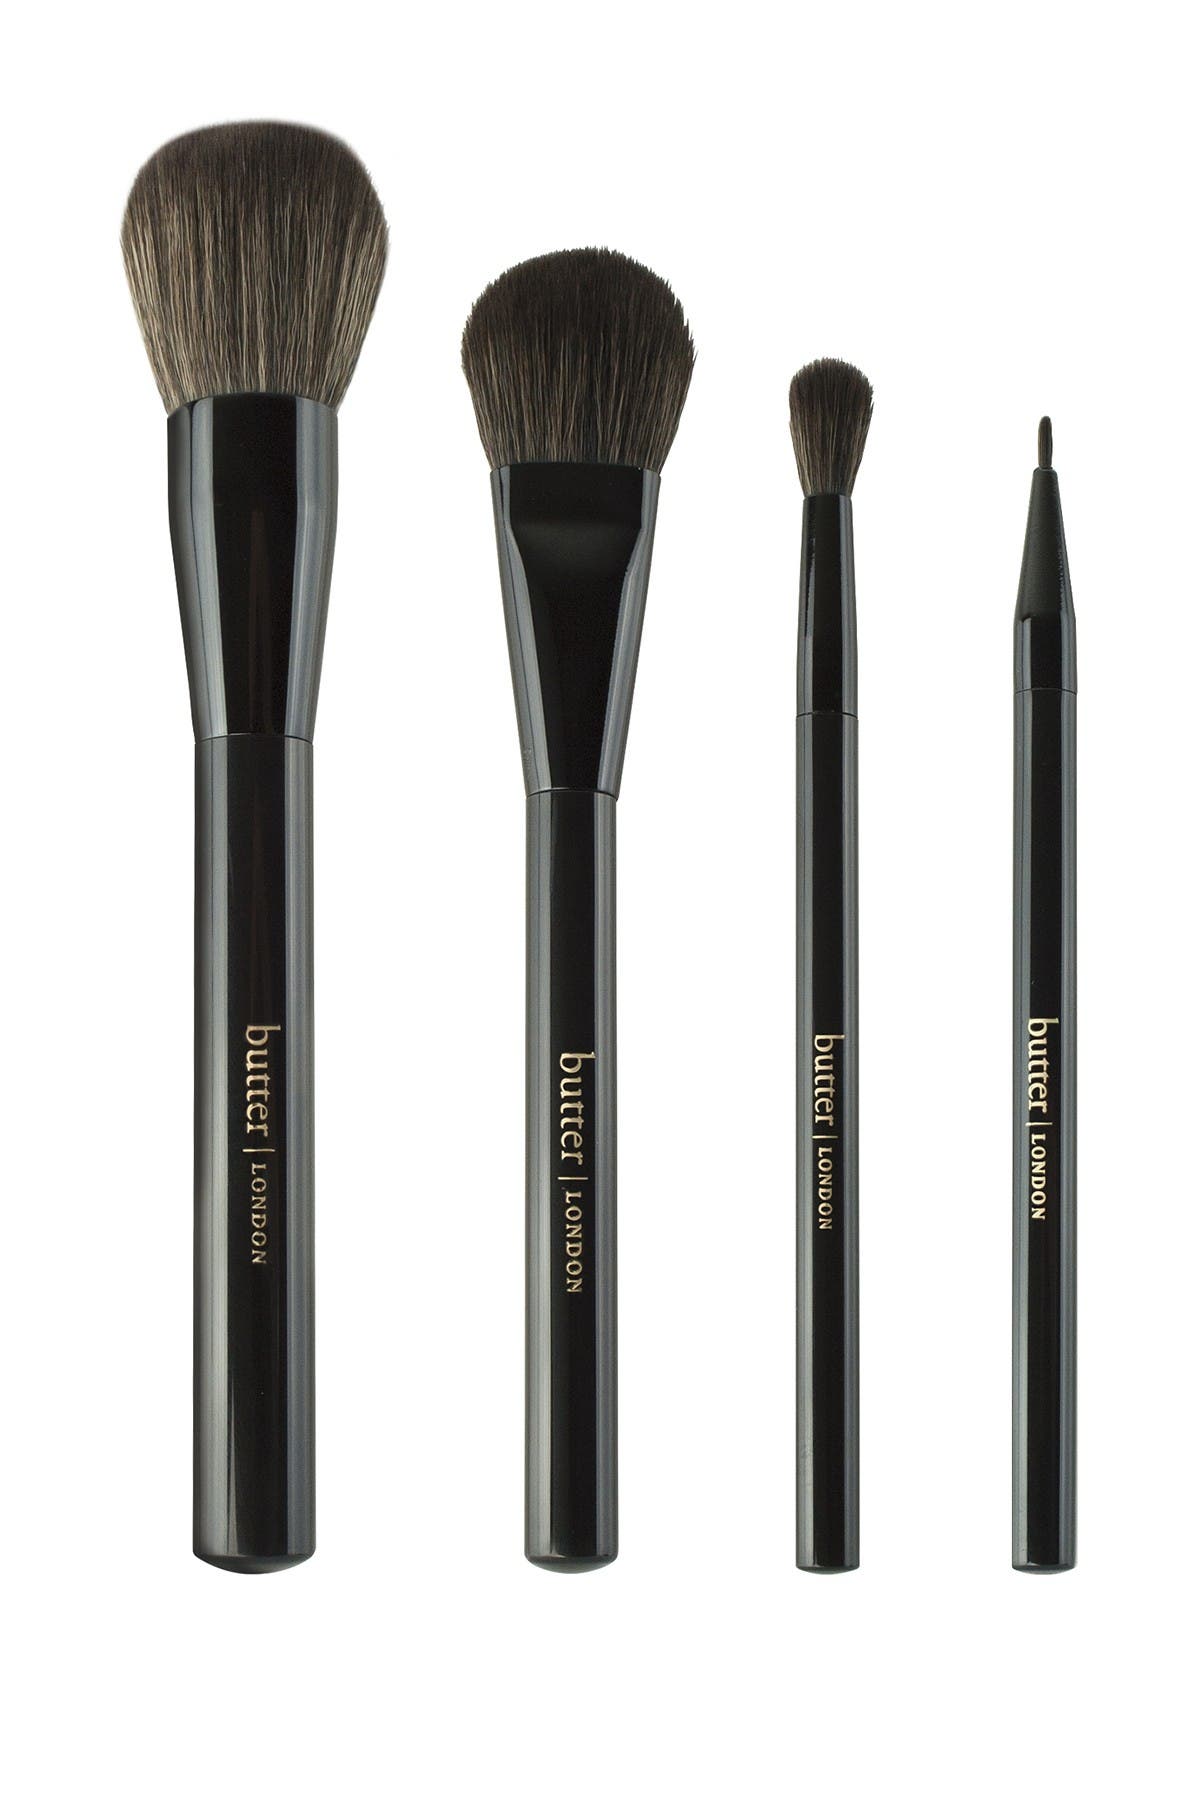 Butter London Posh 4-piece Makeup Brush Set In Black